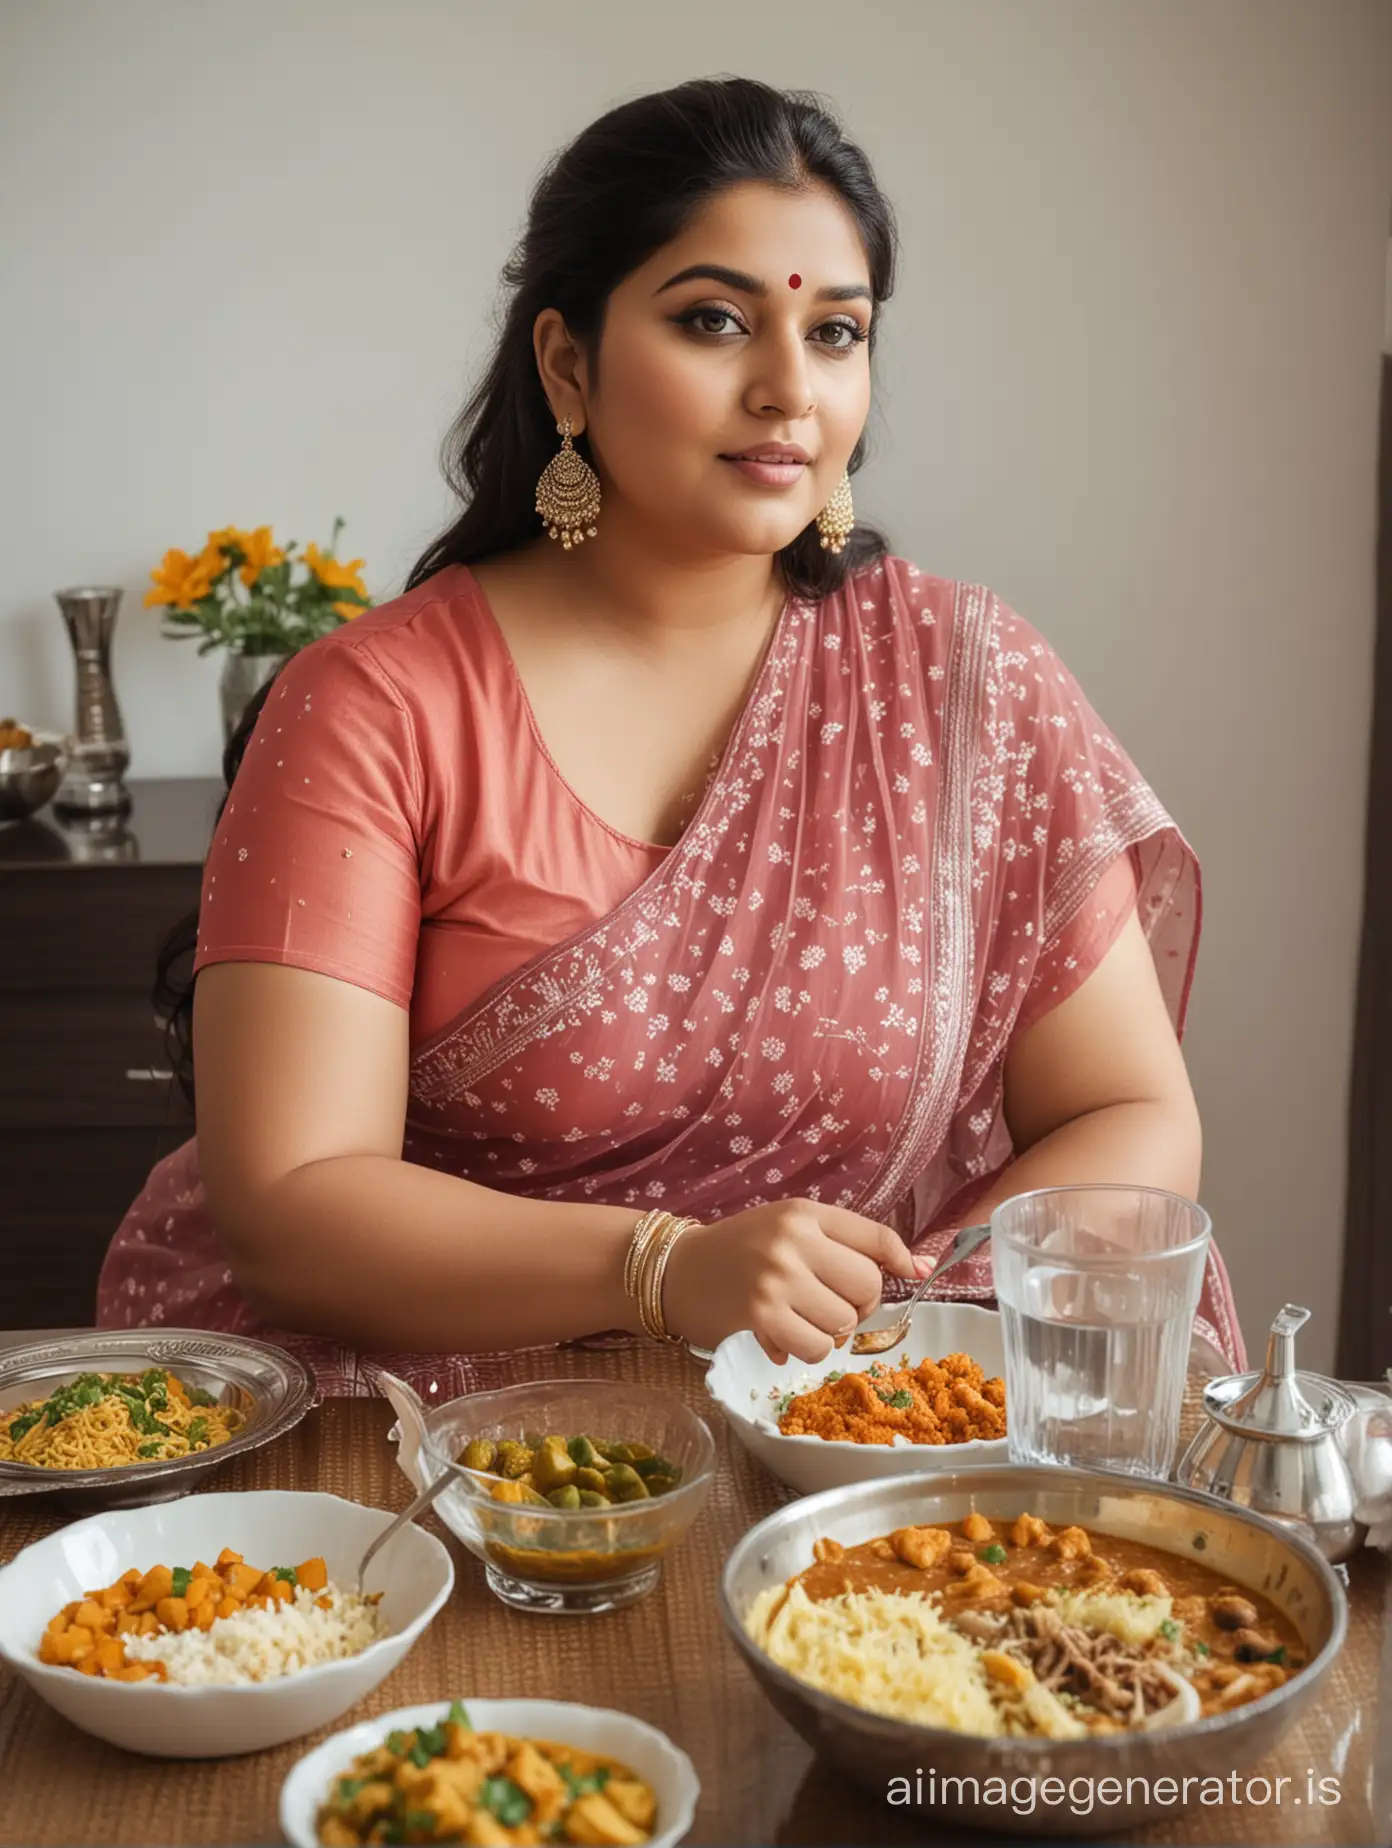 Elegant-Indian-Plus-Size-Women-Enjoying-Lunch-at-Dining-Table